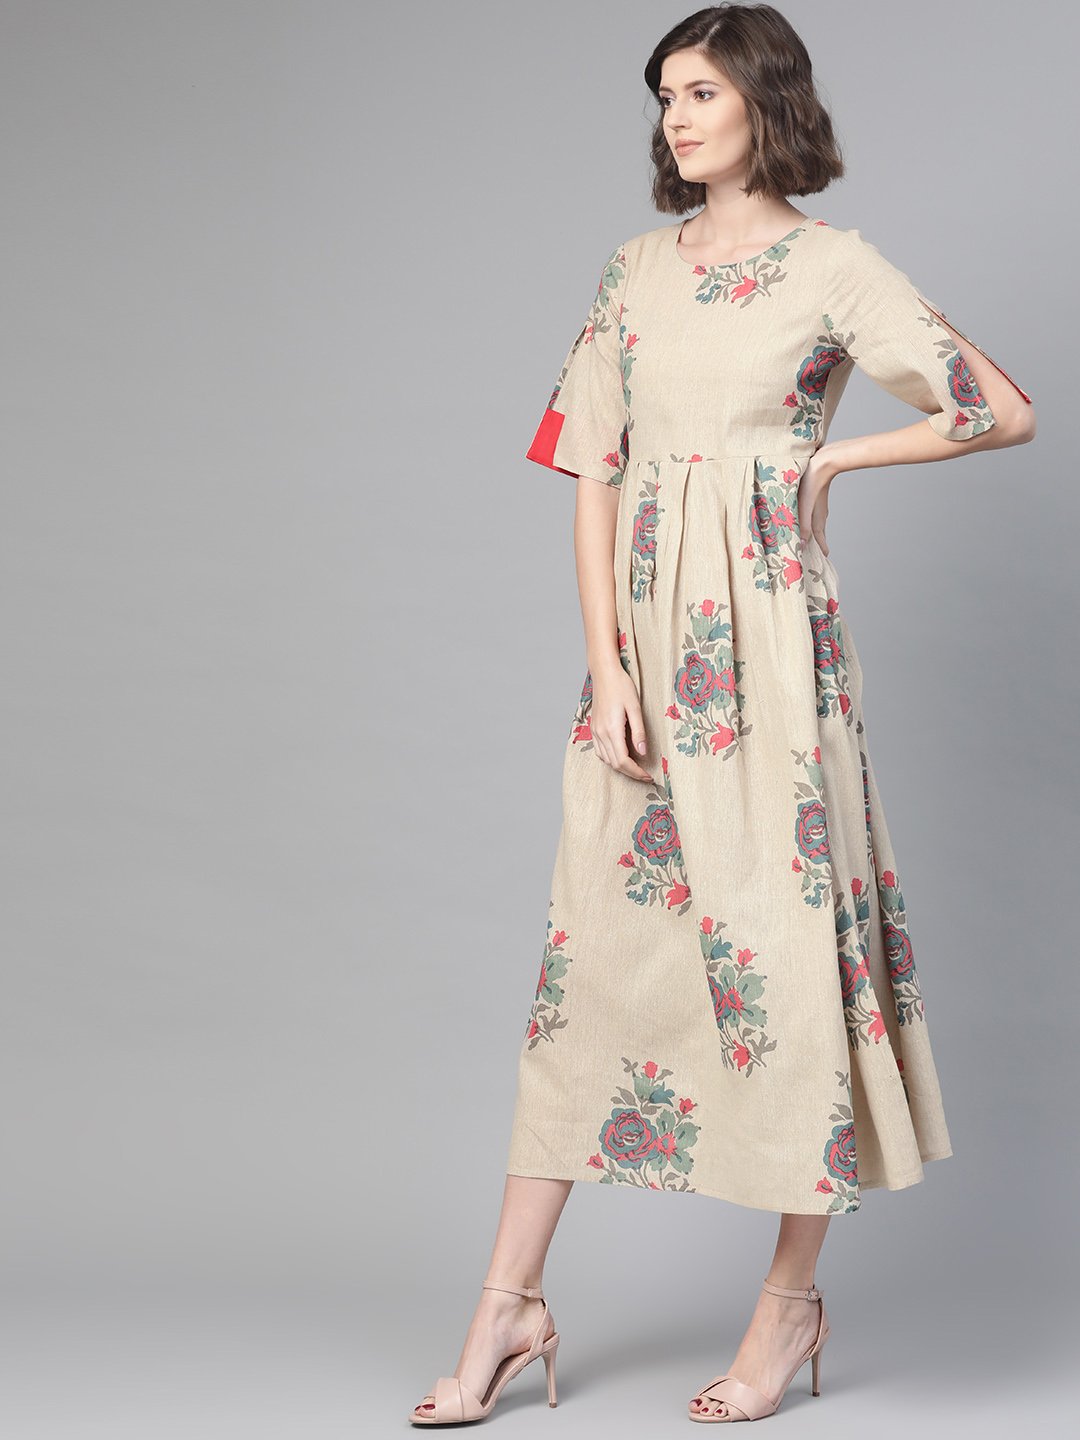 Women's Nayo Cream & Coral Floral Printed Maxi Dress - Nayo Clothing